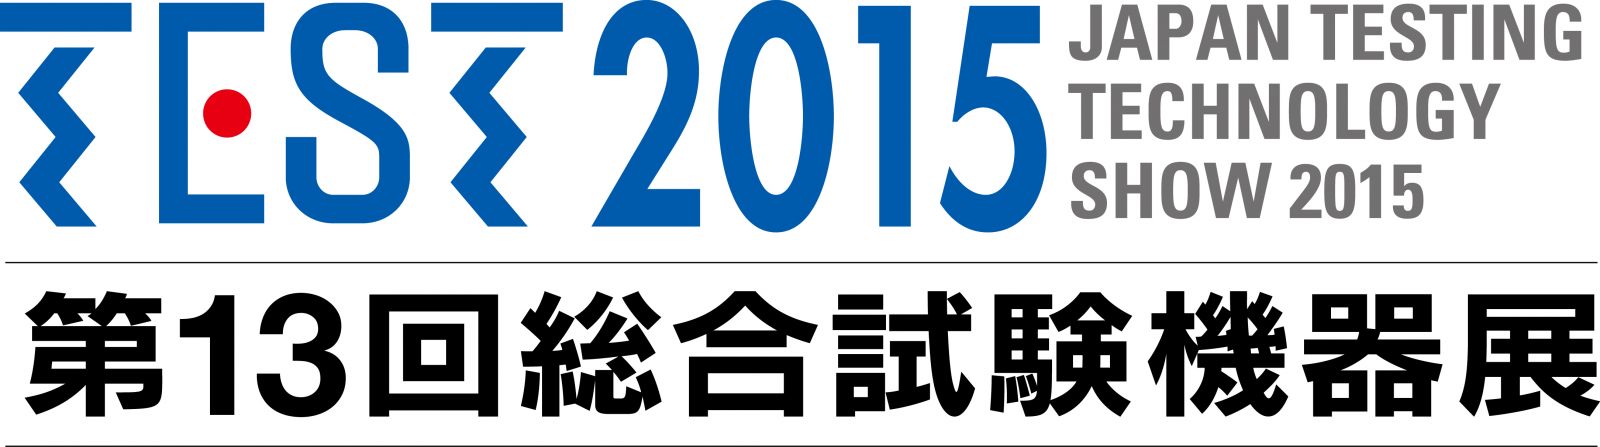 TEST2015［第13回総合試験機器展］2015年9月16日（水）～18日（金）東京ビッグサイト 西ホール